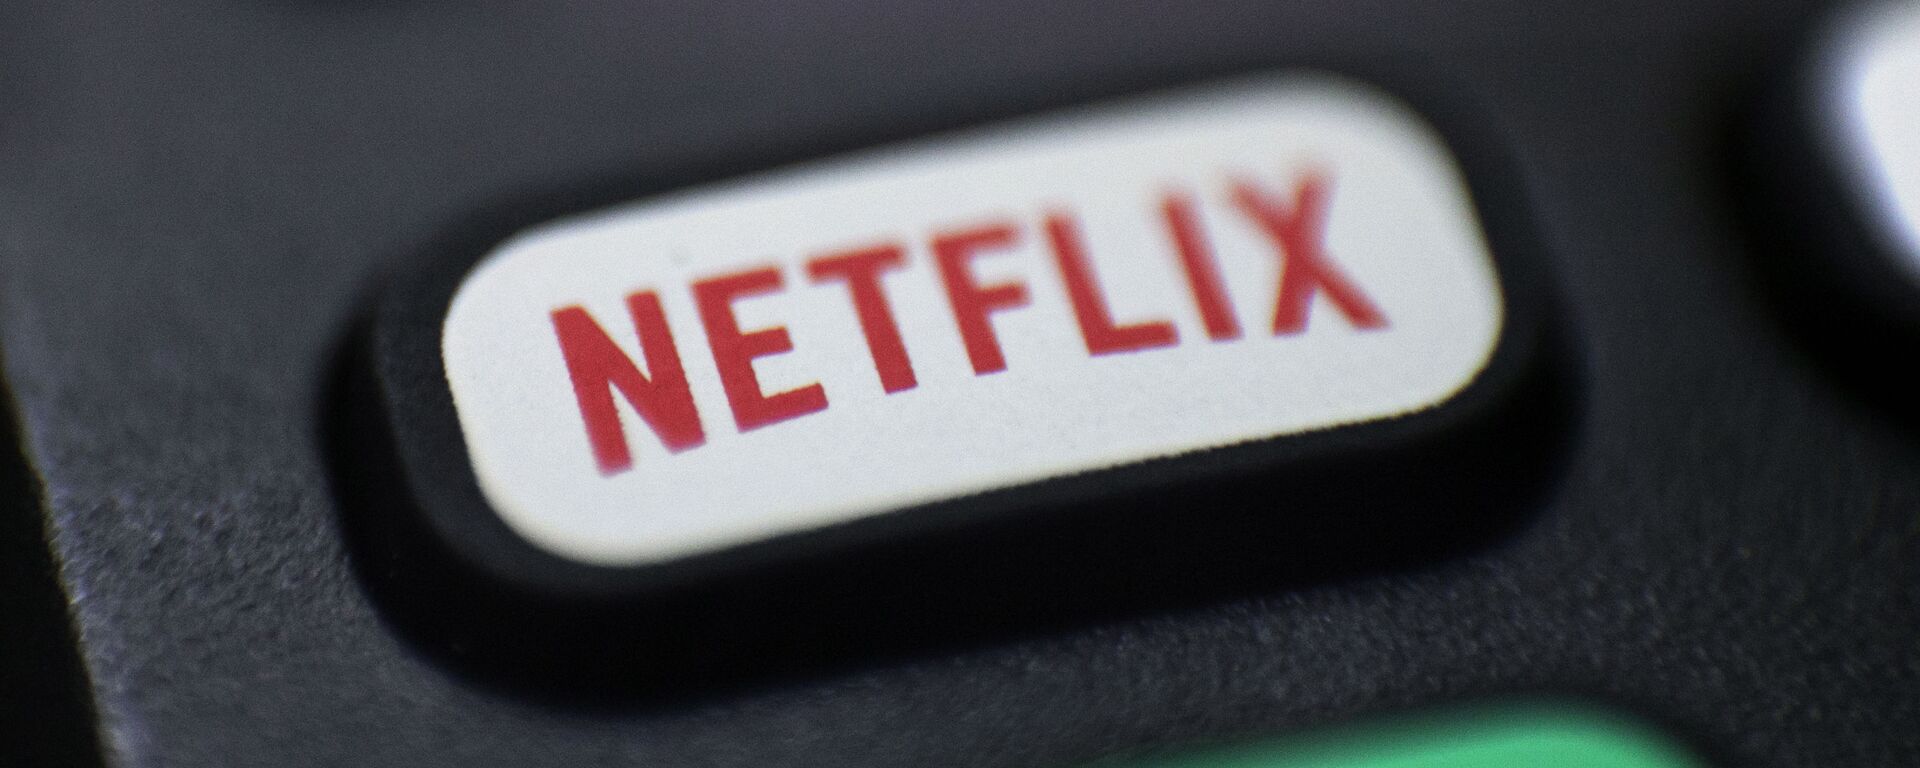  Logo for Netflix on a remote control  - Sputnik International, 1920, 23.04.2022